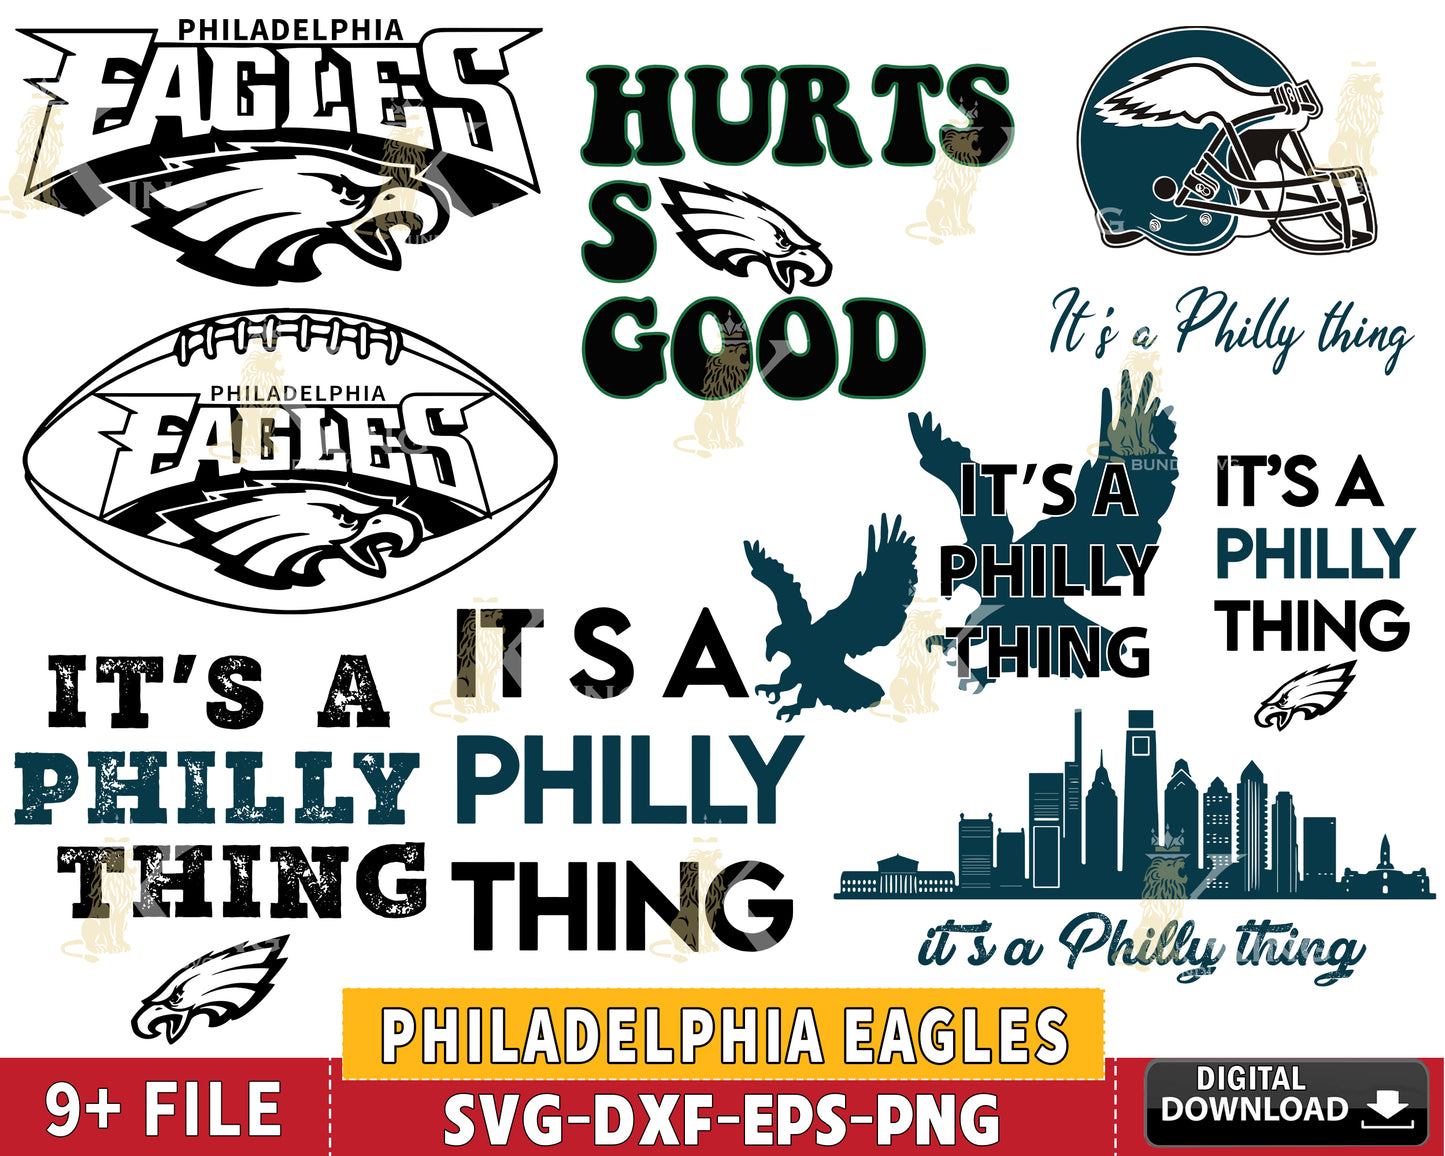 Download free philadelphia eagles logo png for your new logo